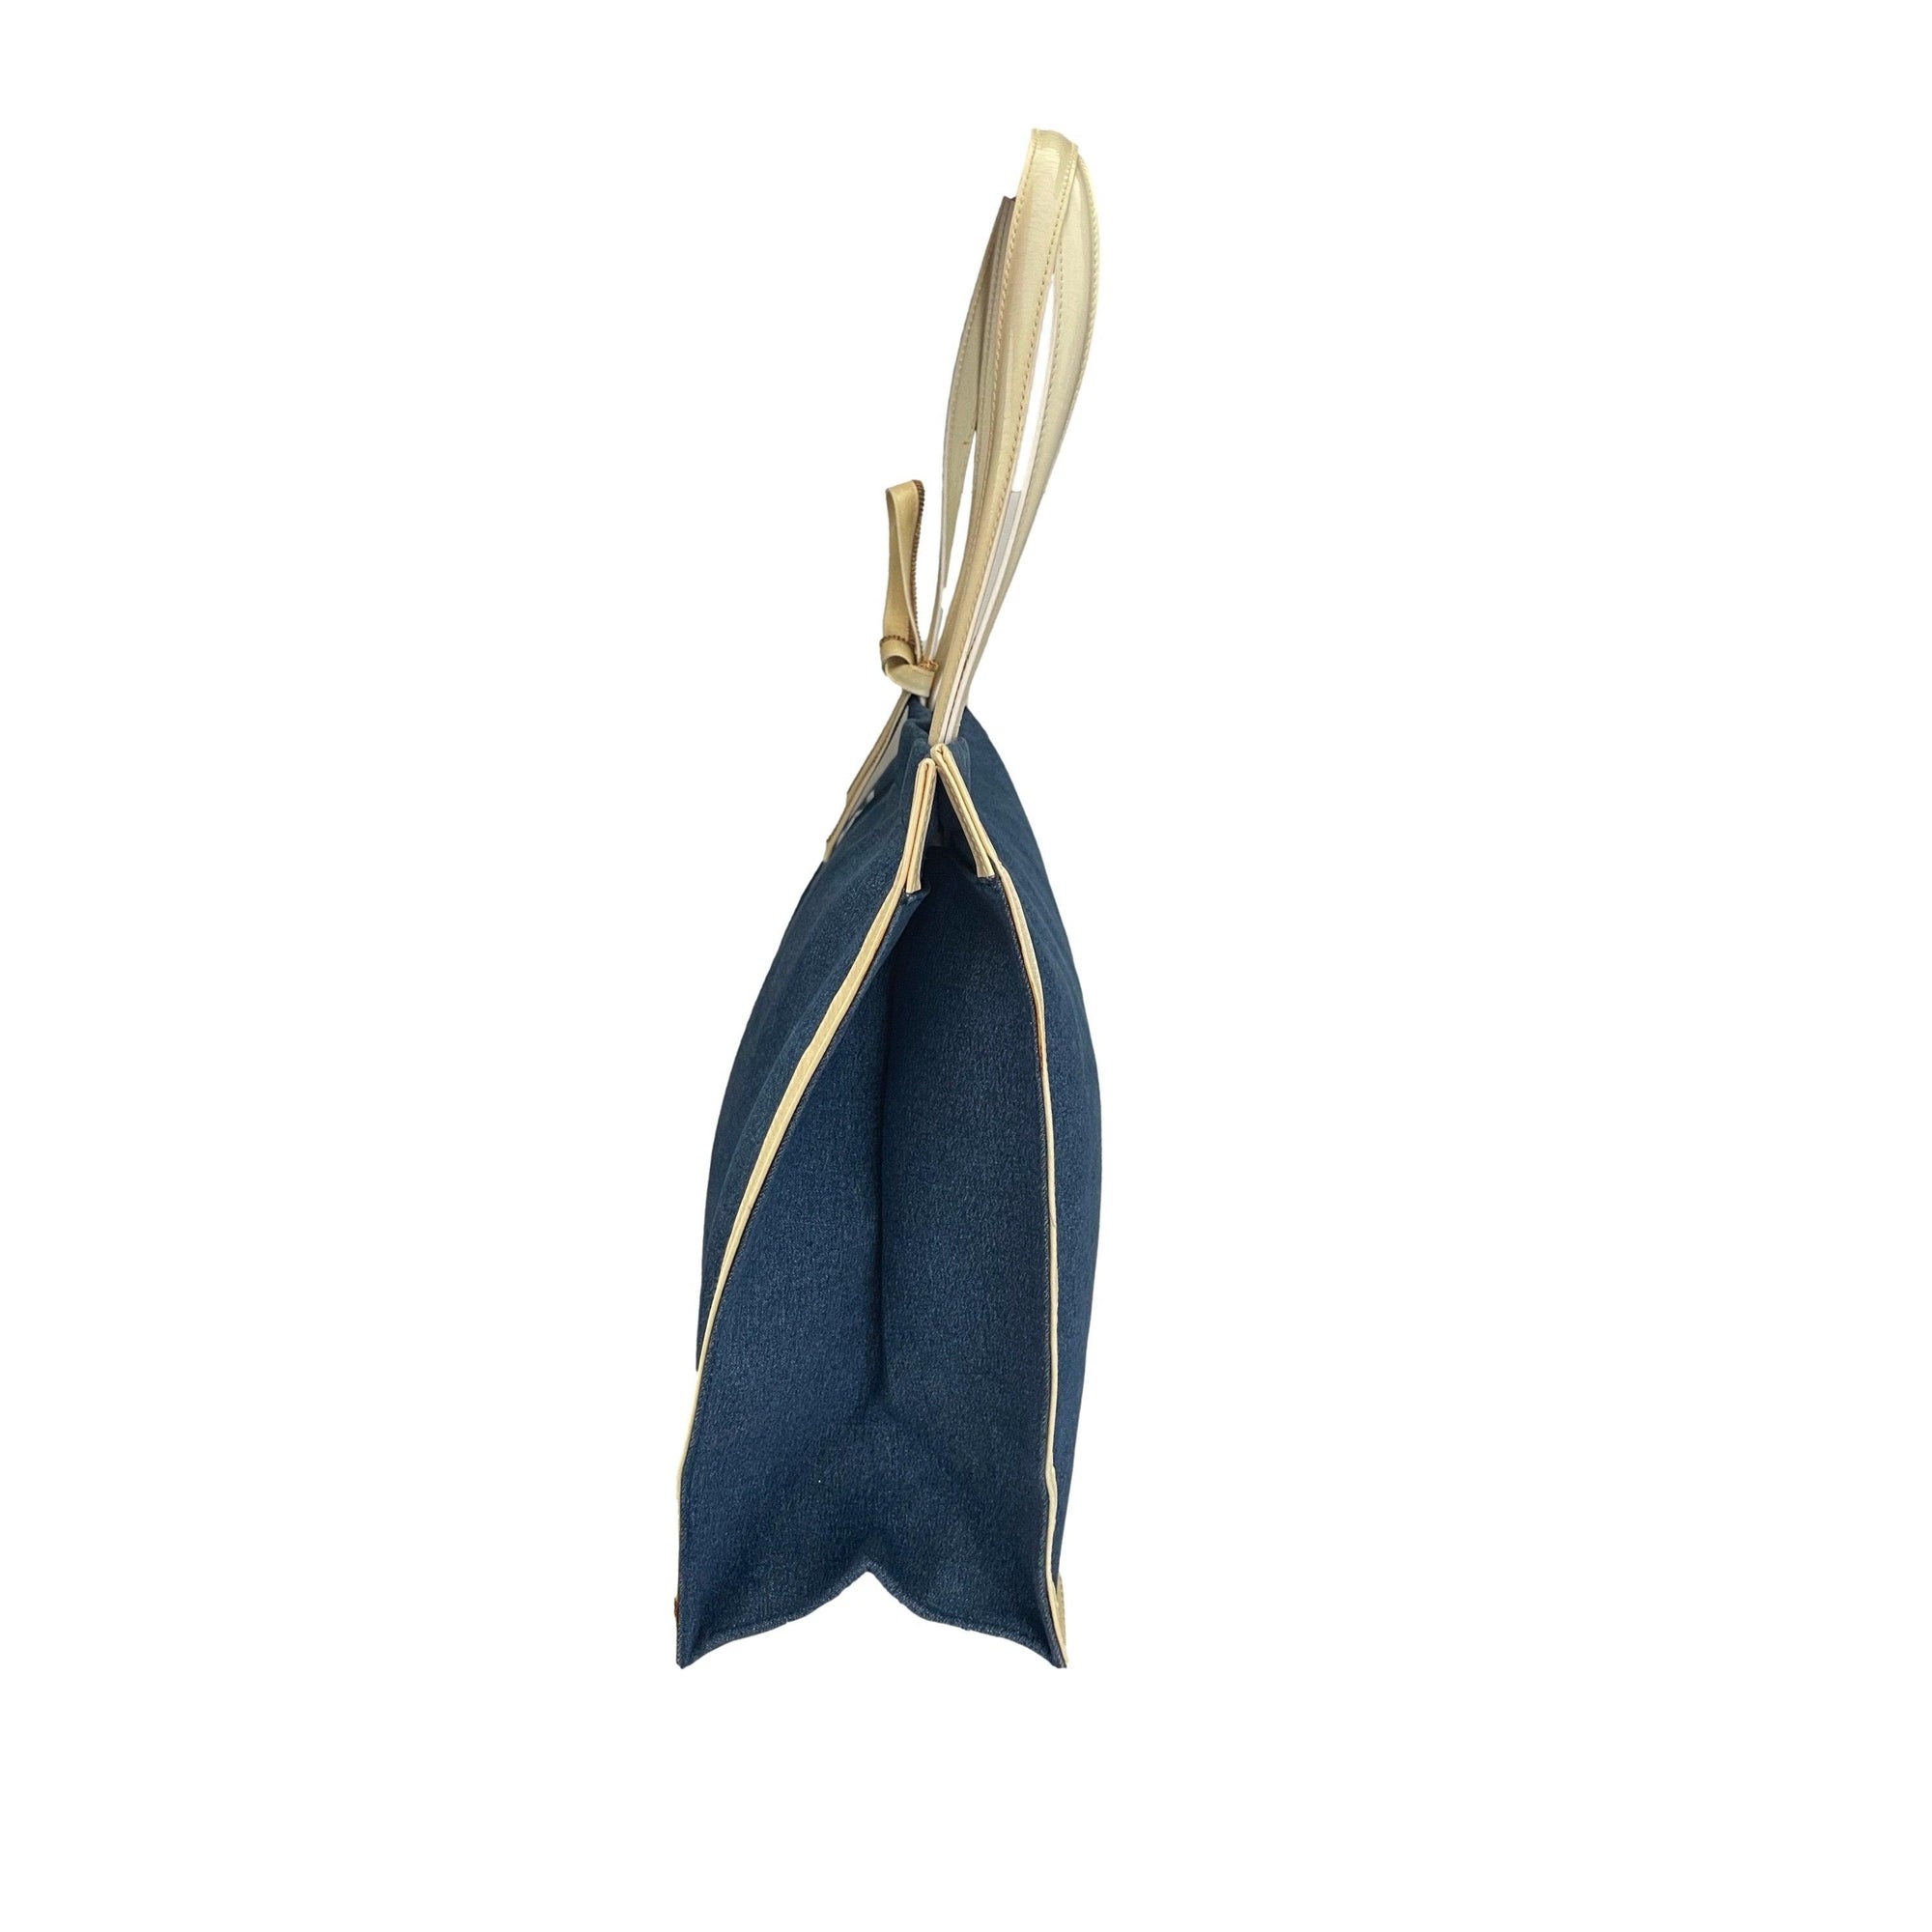 Dior Denim Logo Tote - Handbags